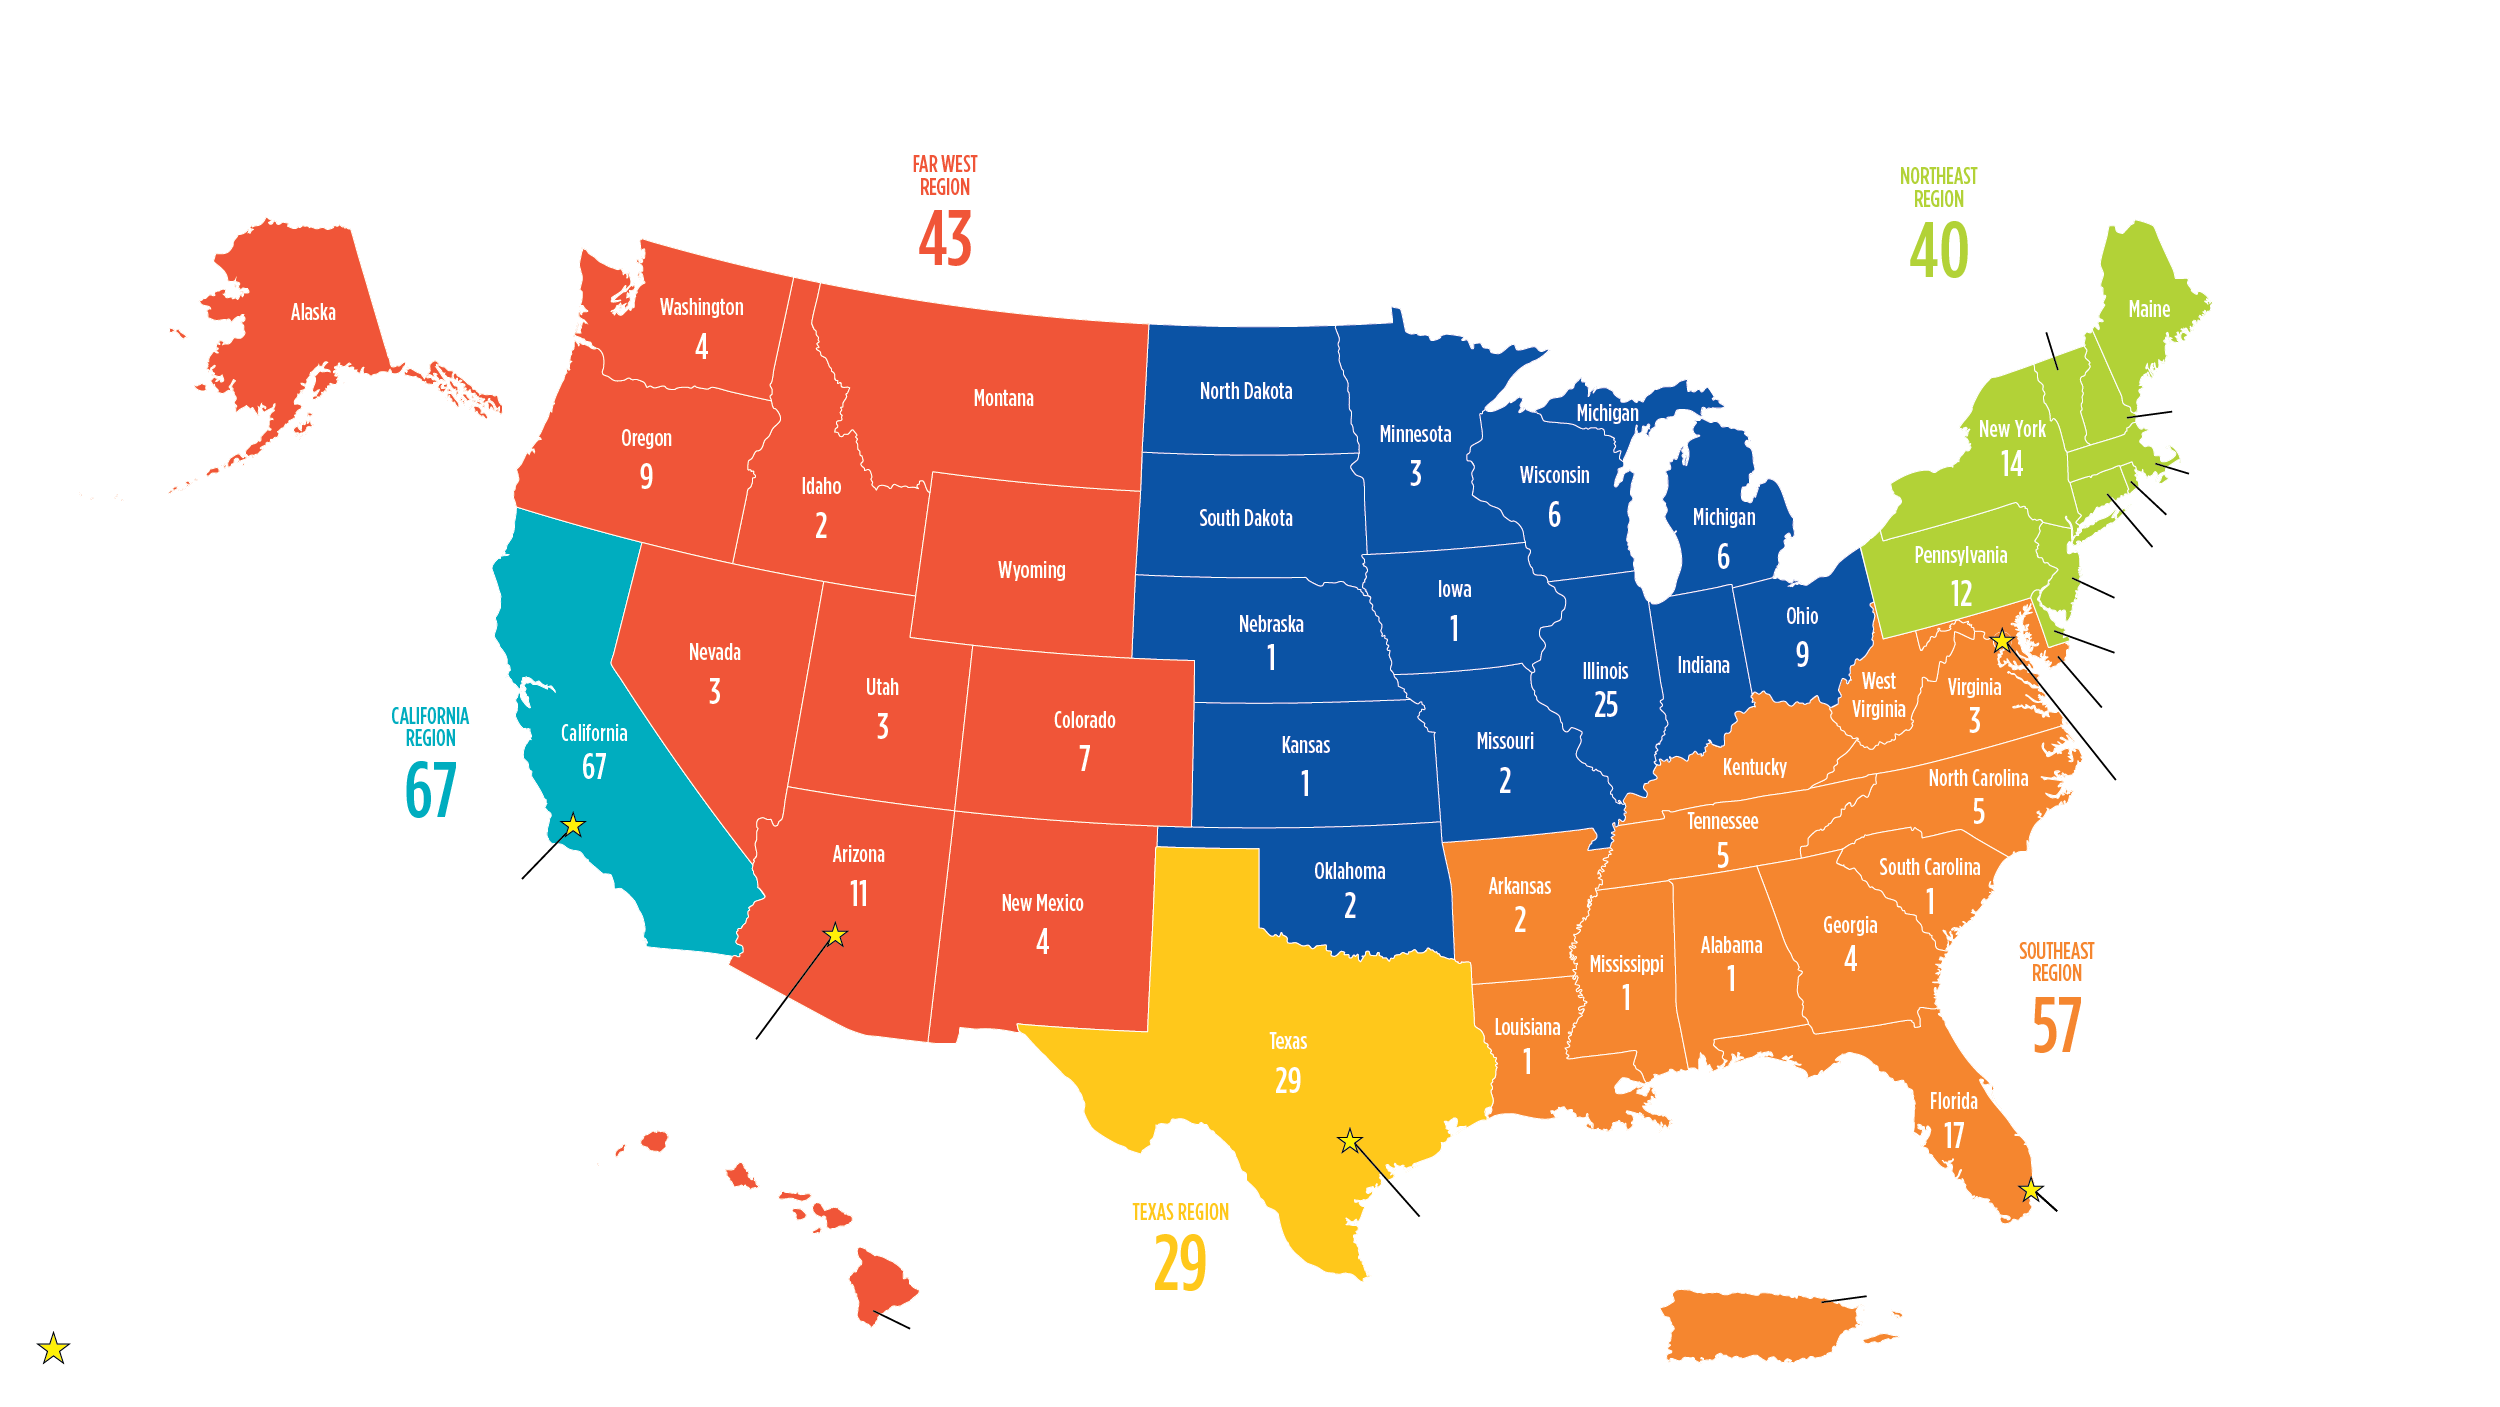 UnidosUS Affiliate Network Map